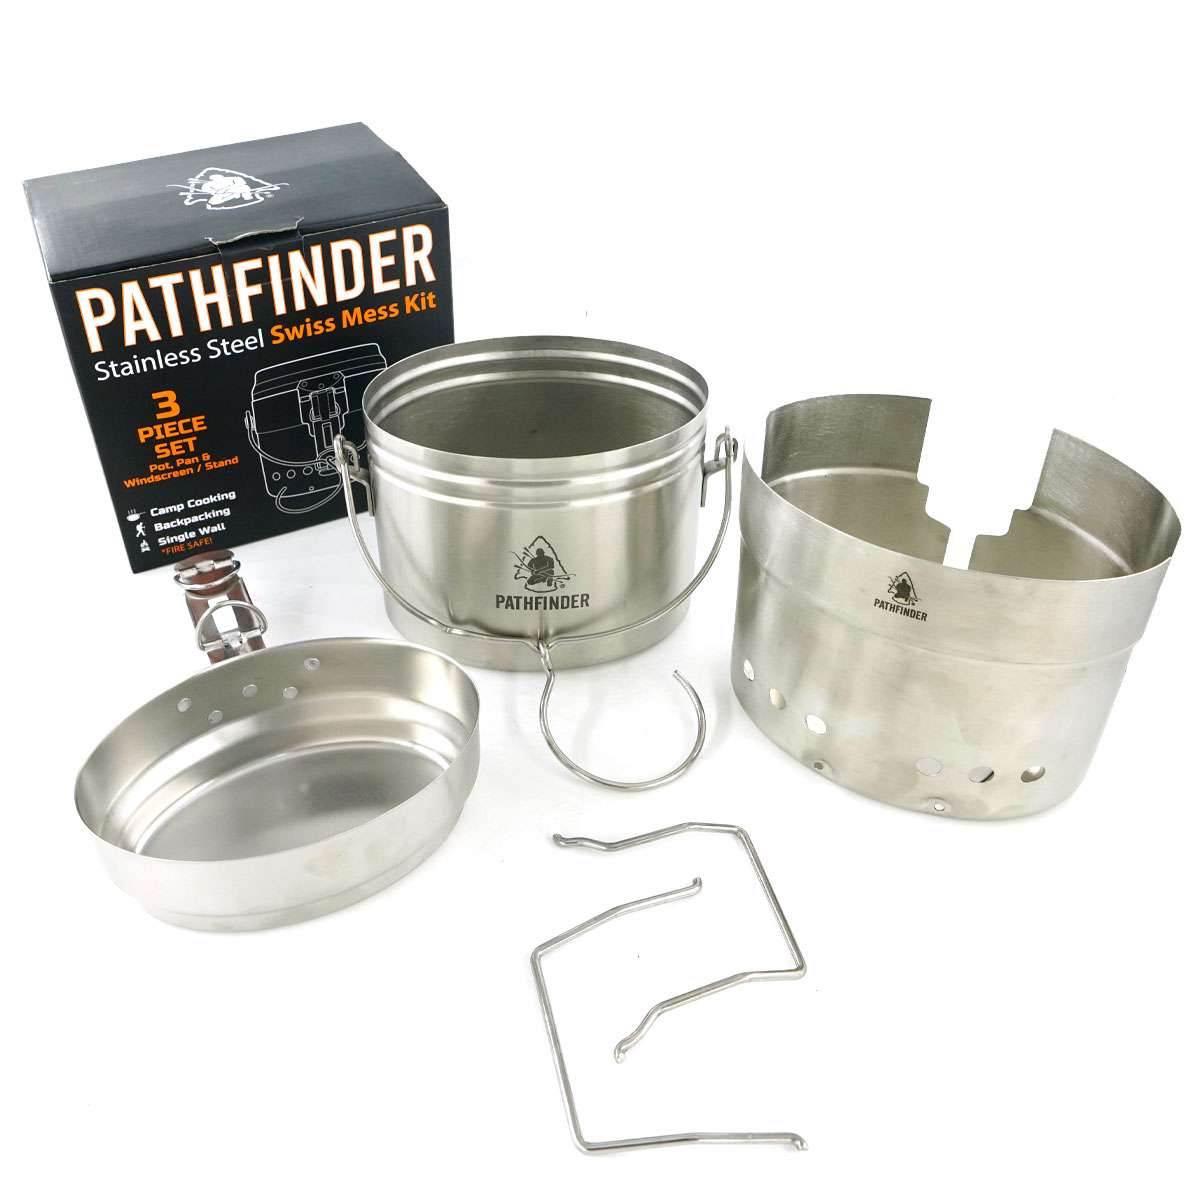 Pathfinder PFM40 Swedish Mess Kit - Stainless Steel